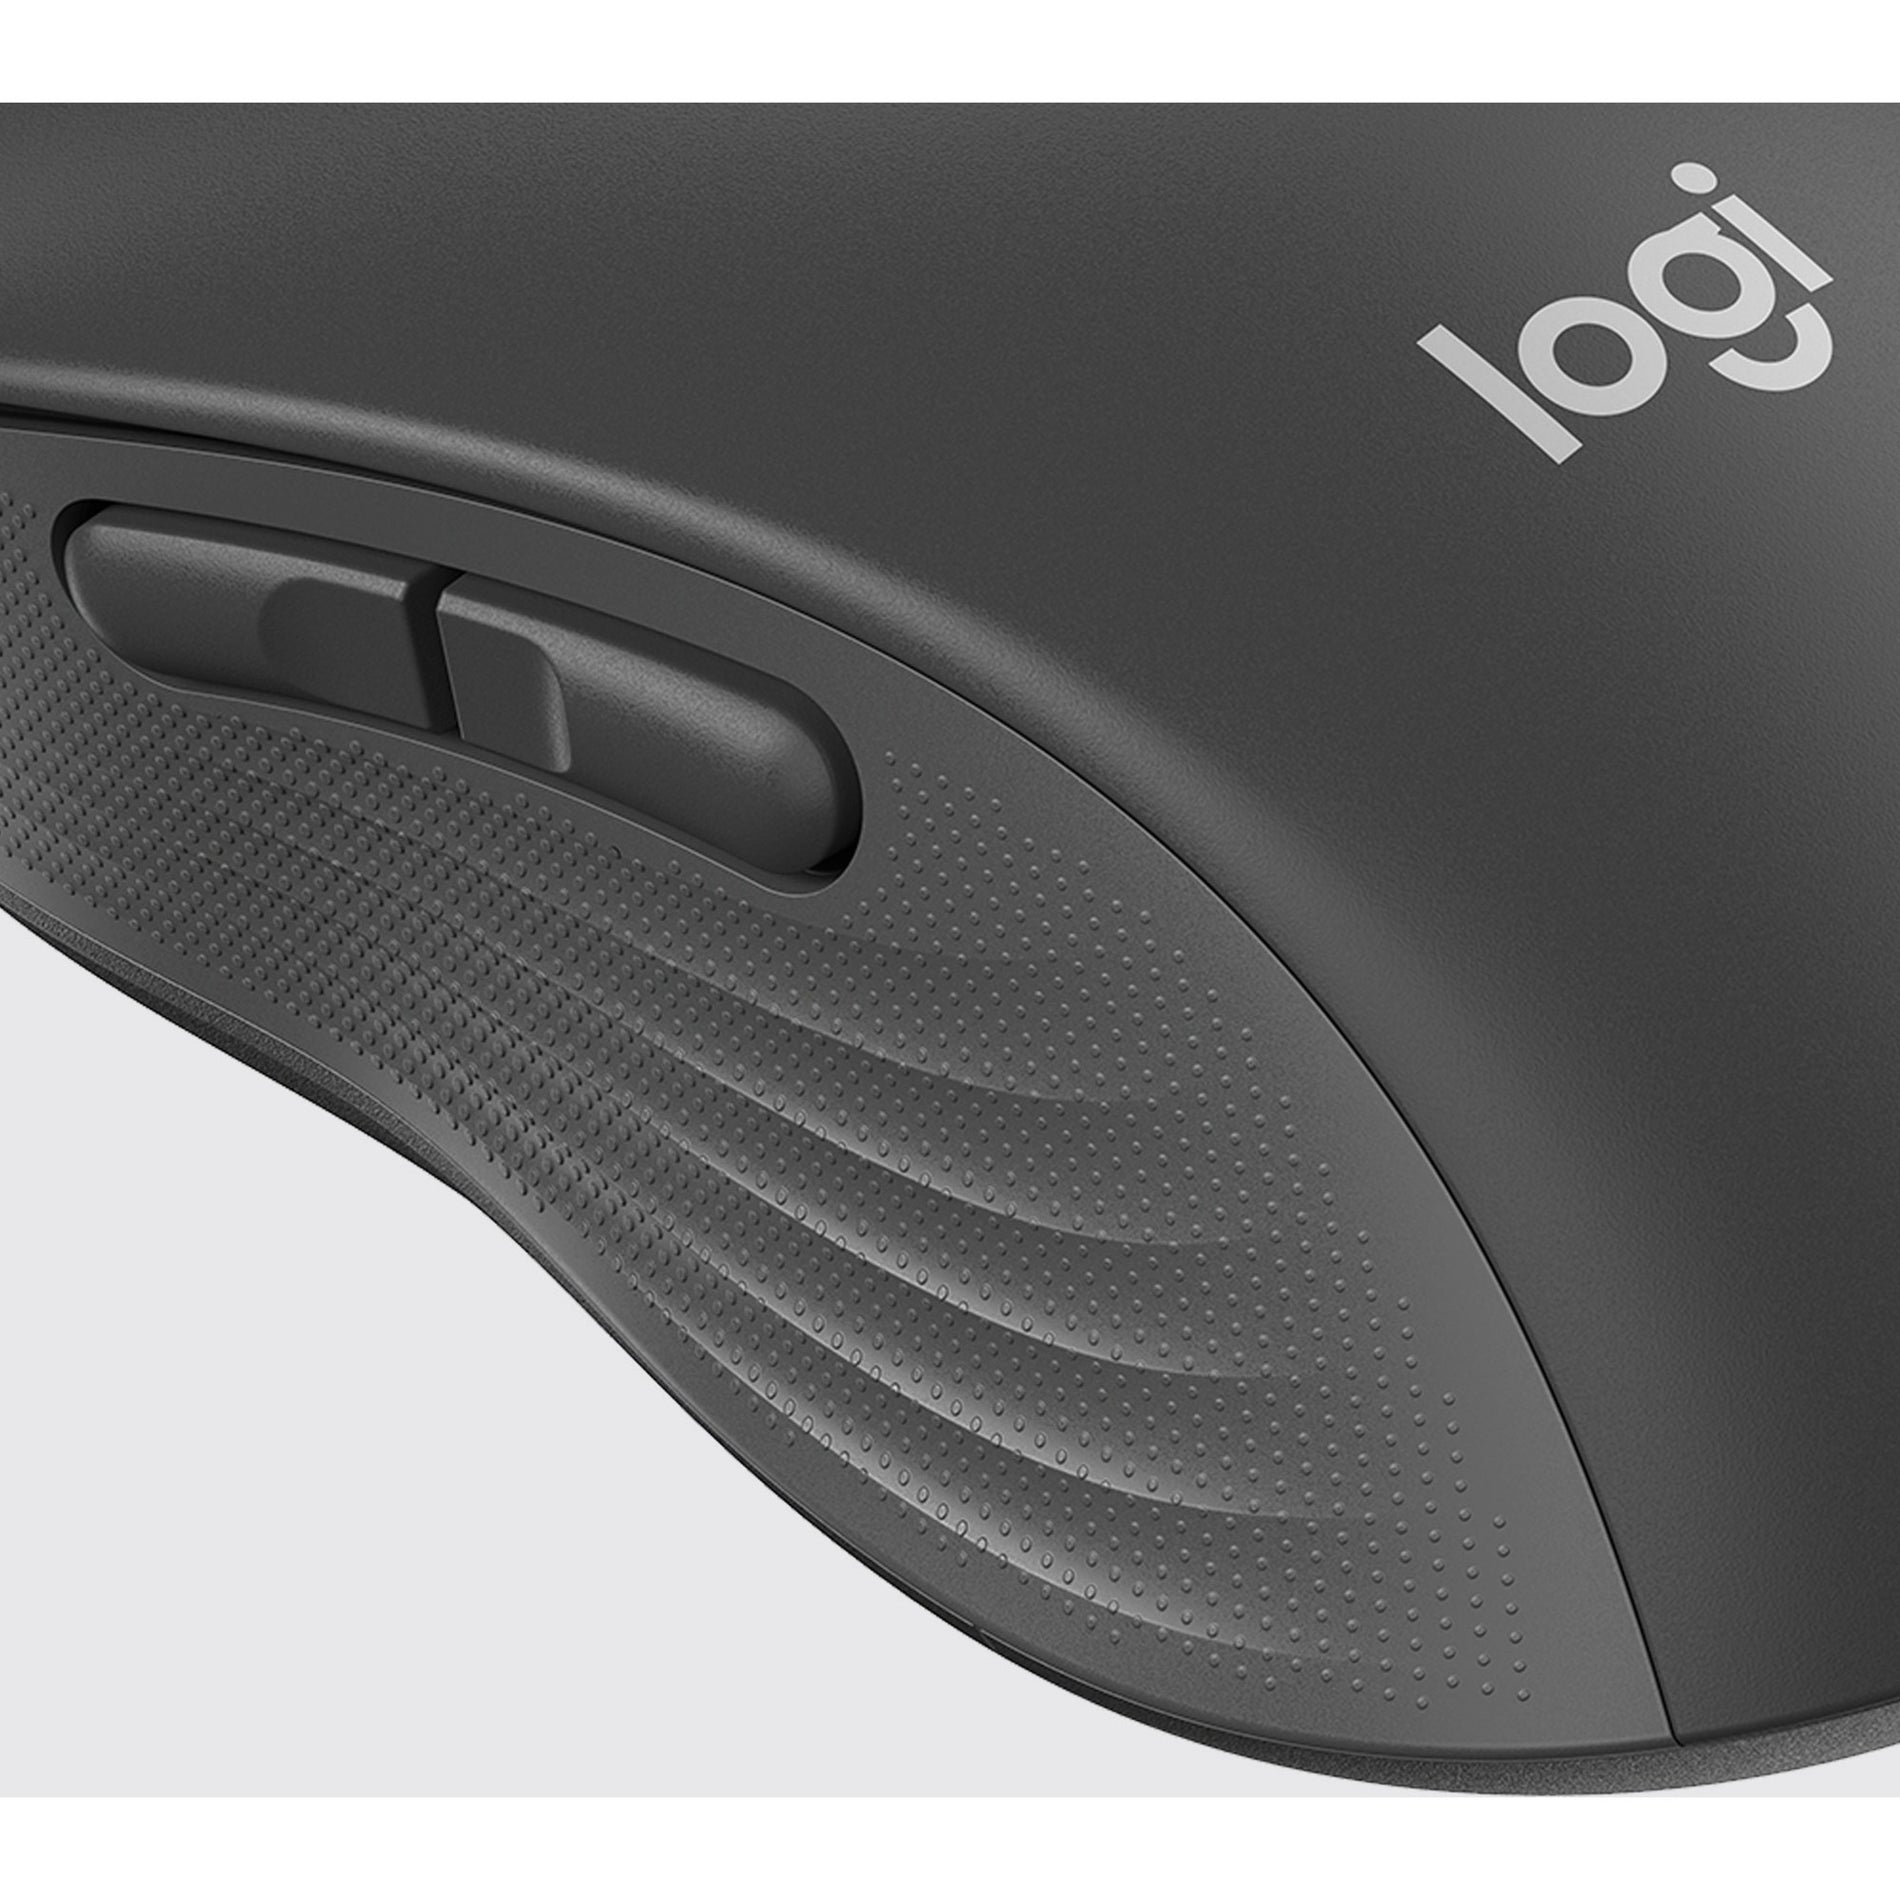 Logitech 910-006272 Signature M650 Mouse, Wireless Bluetooth/Radio Frequency, Graphite